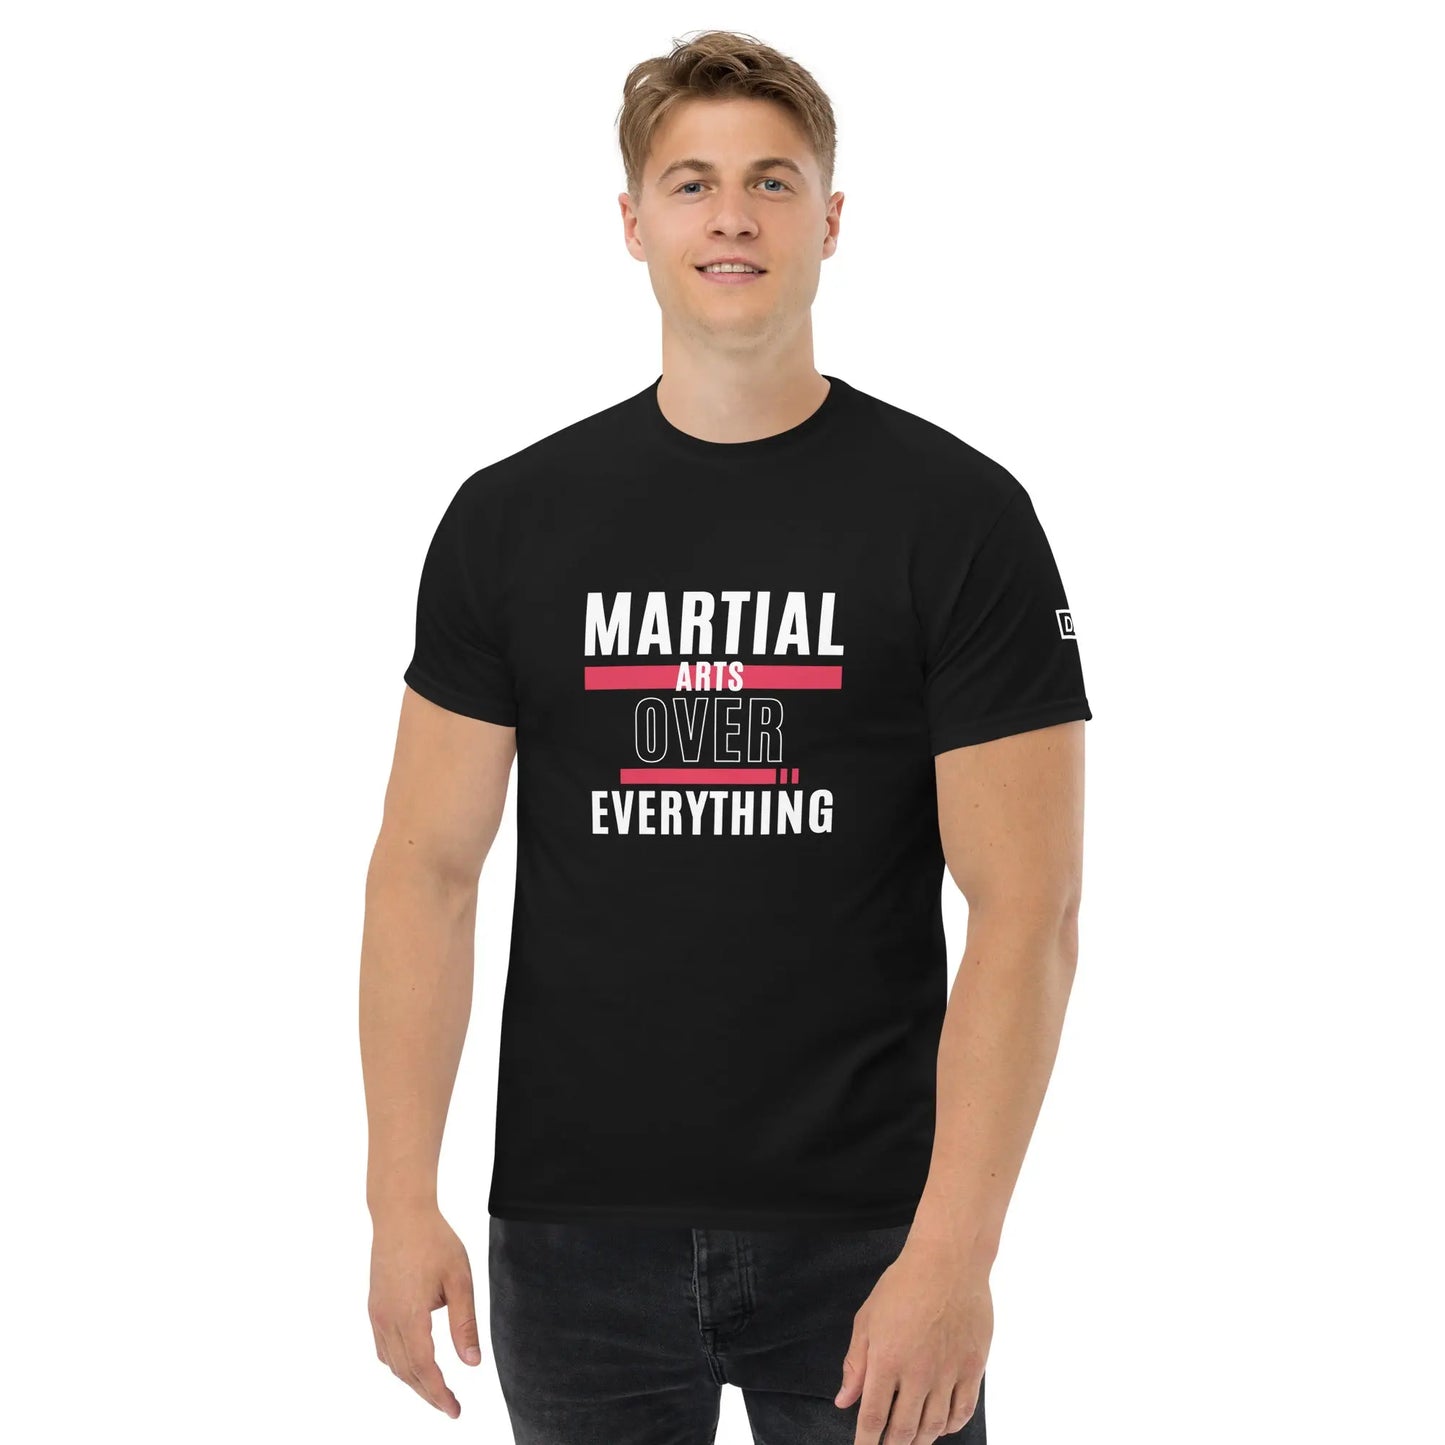 Martial Arts Over Everything Men's Classic Tee deadlyartofsurvival.com